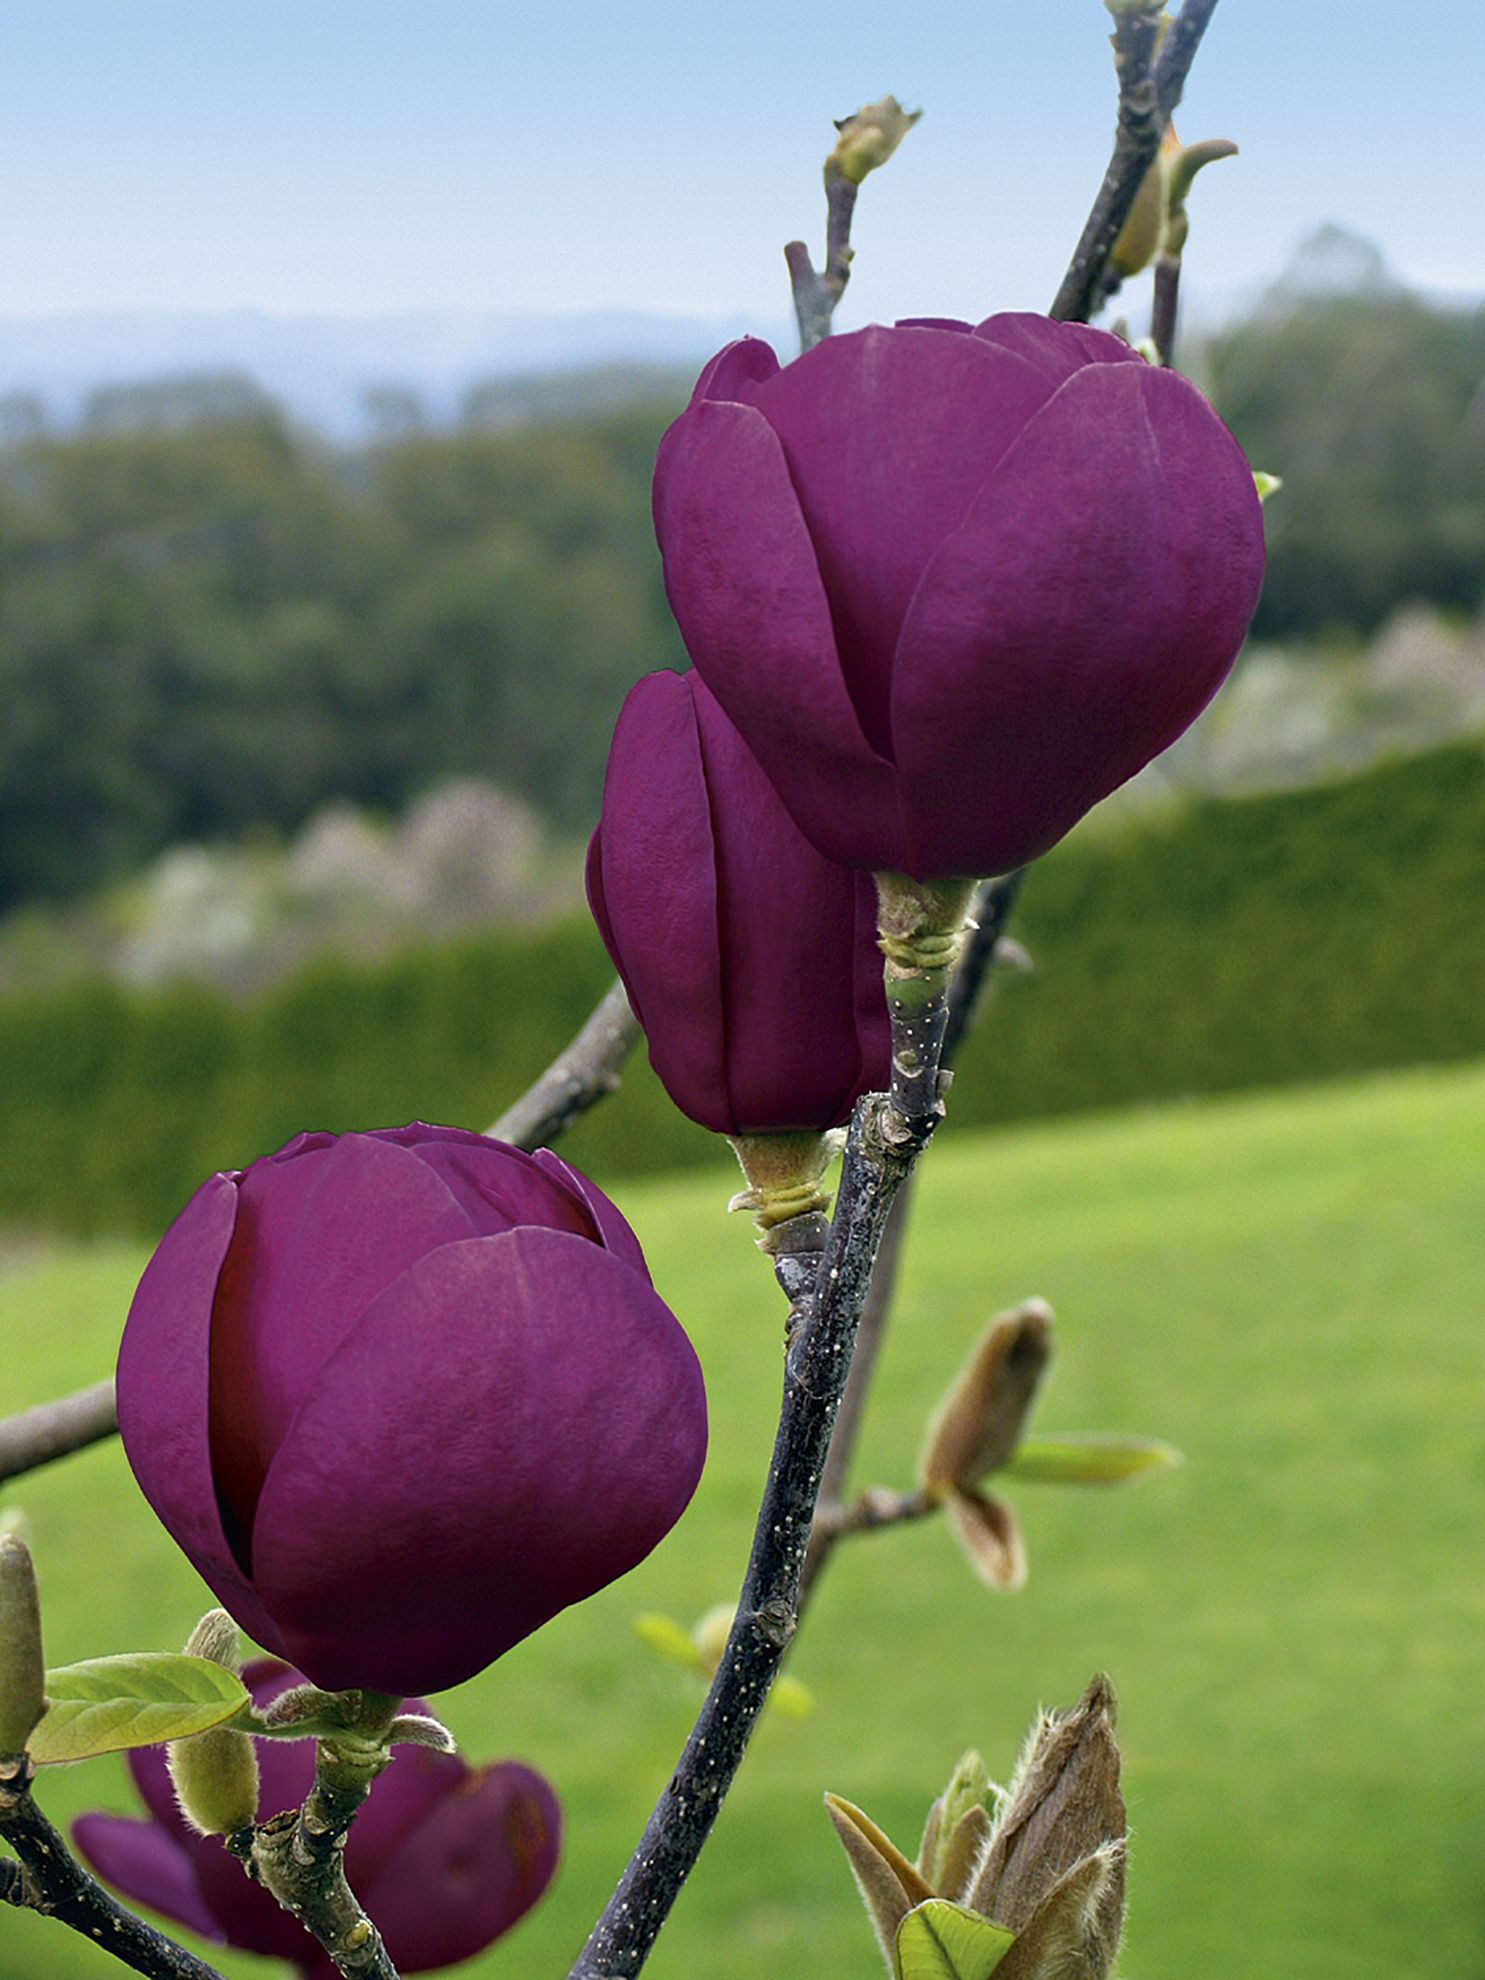 http://www.breederplants.nl/images/thumbs/0002188_magnolia.jpeg